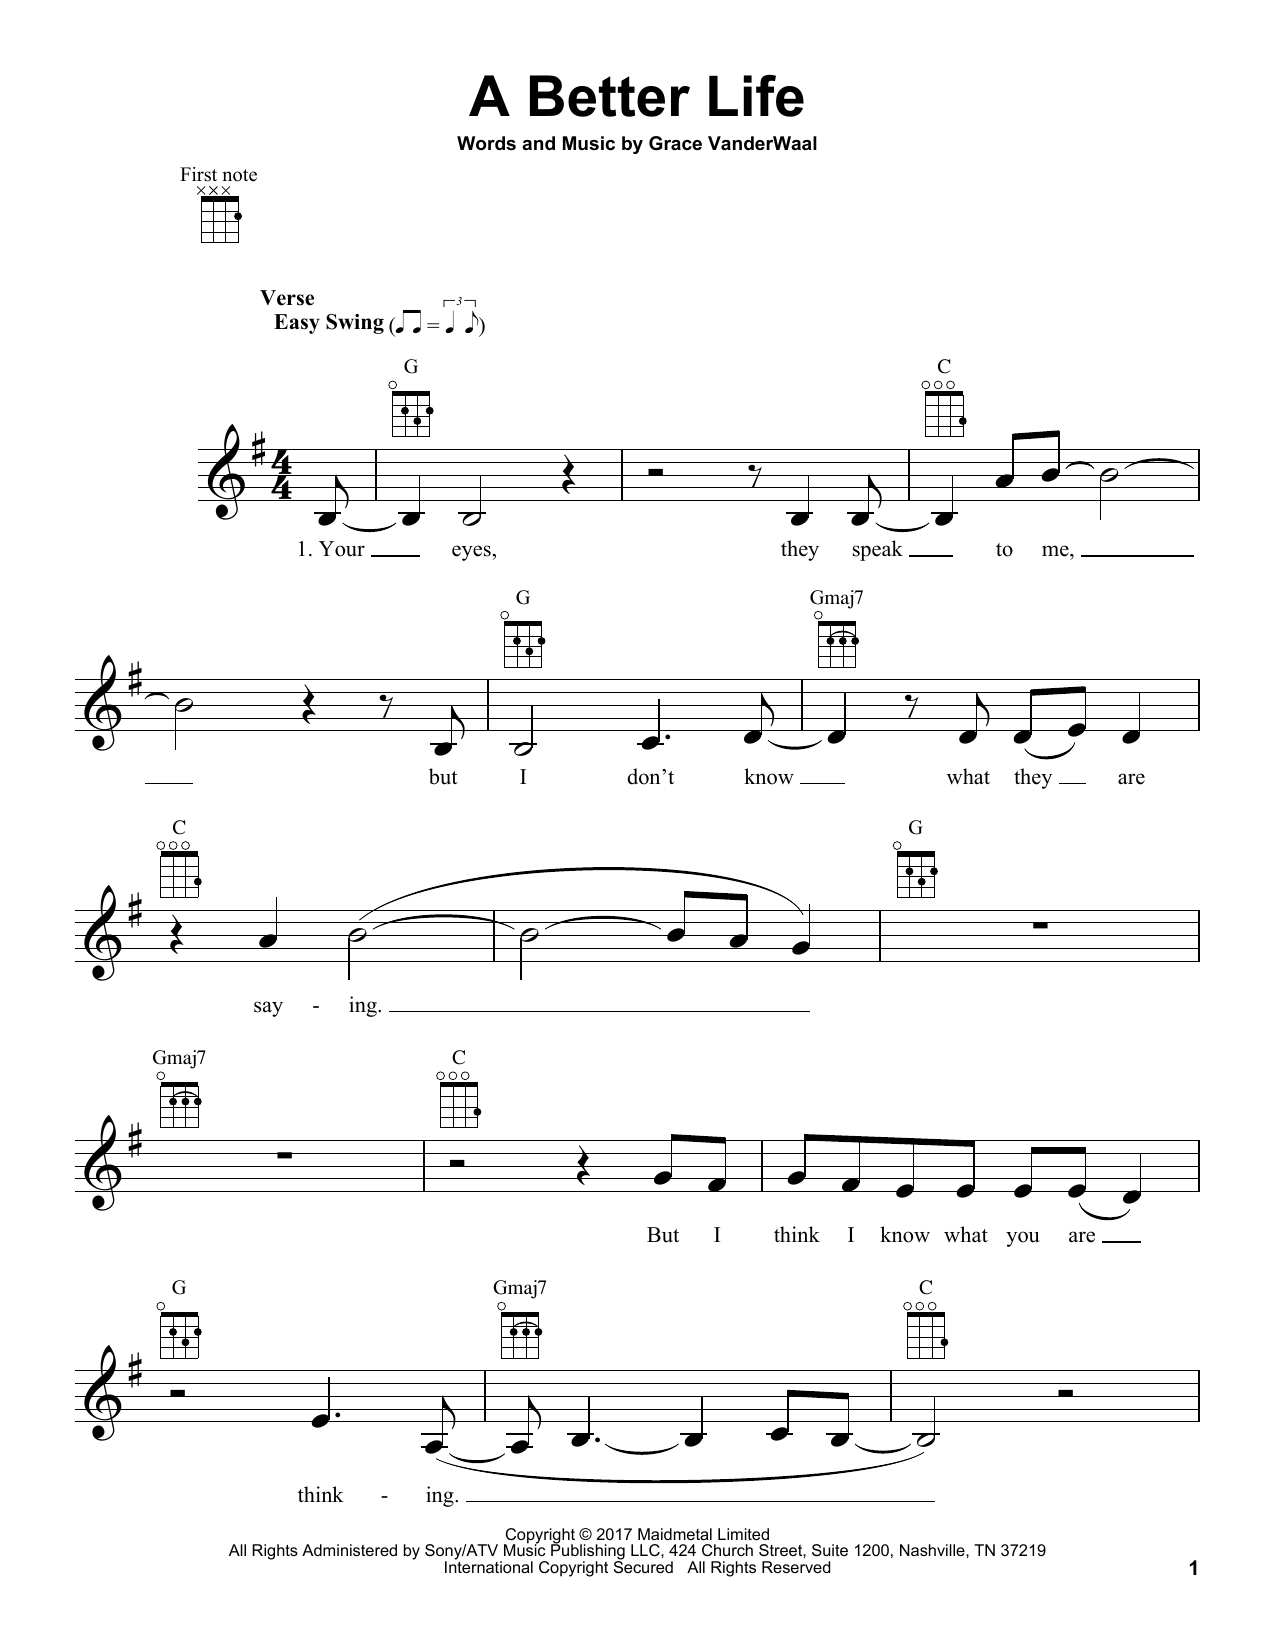 grace-vanderwaal-a-better-life-sheet-music-notes-download-printable